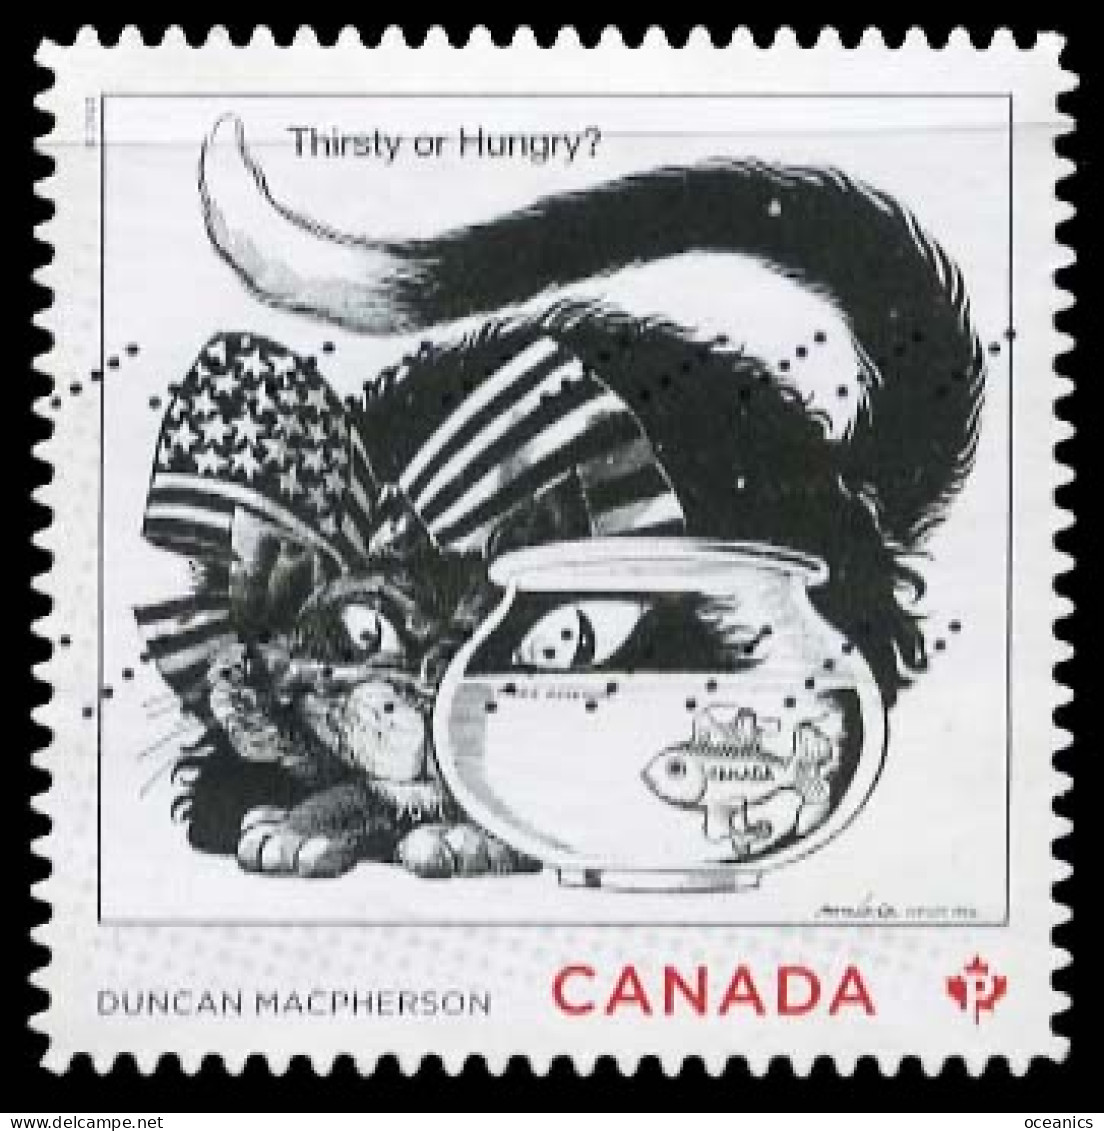 Canada (Scott No.3299 - Editorial Cartoonists) (o) - Used Stamps